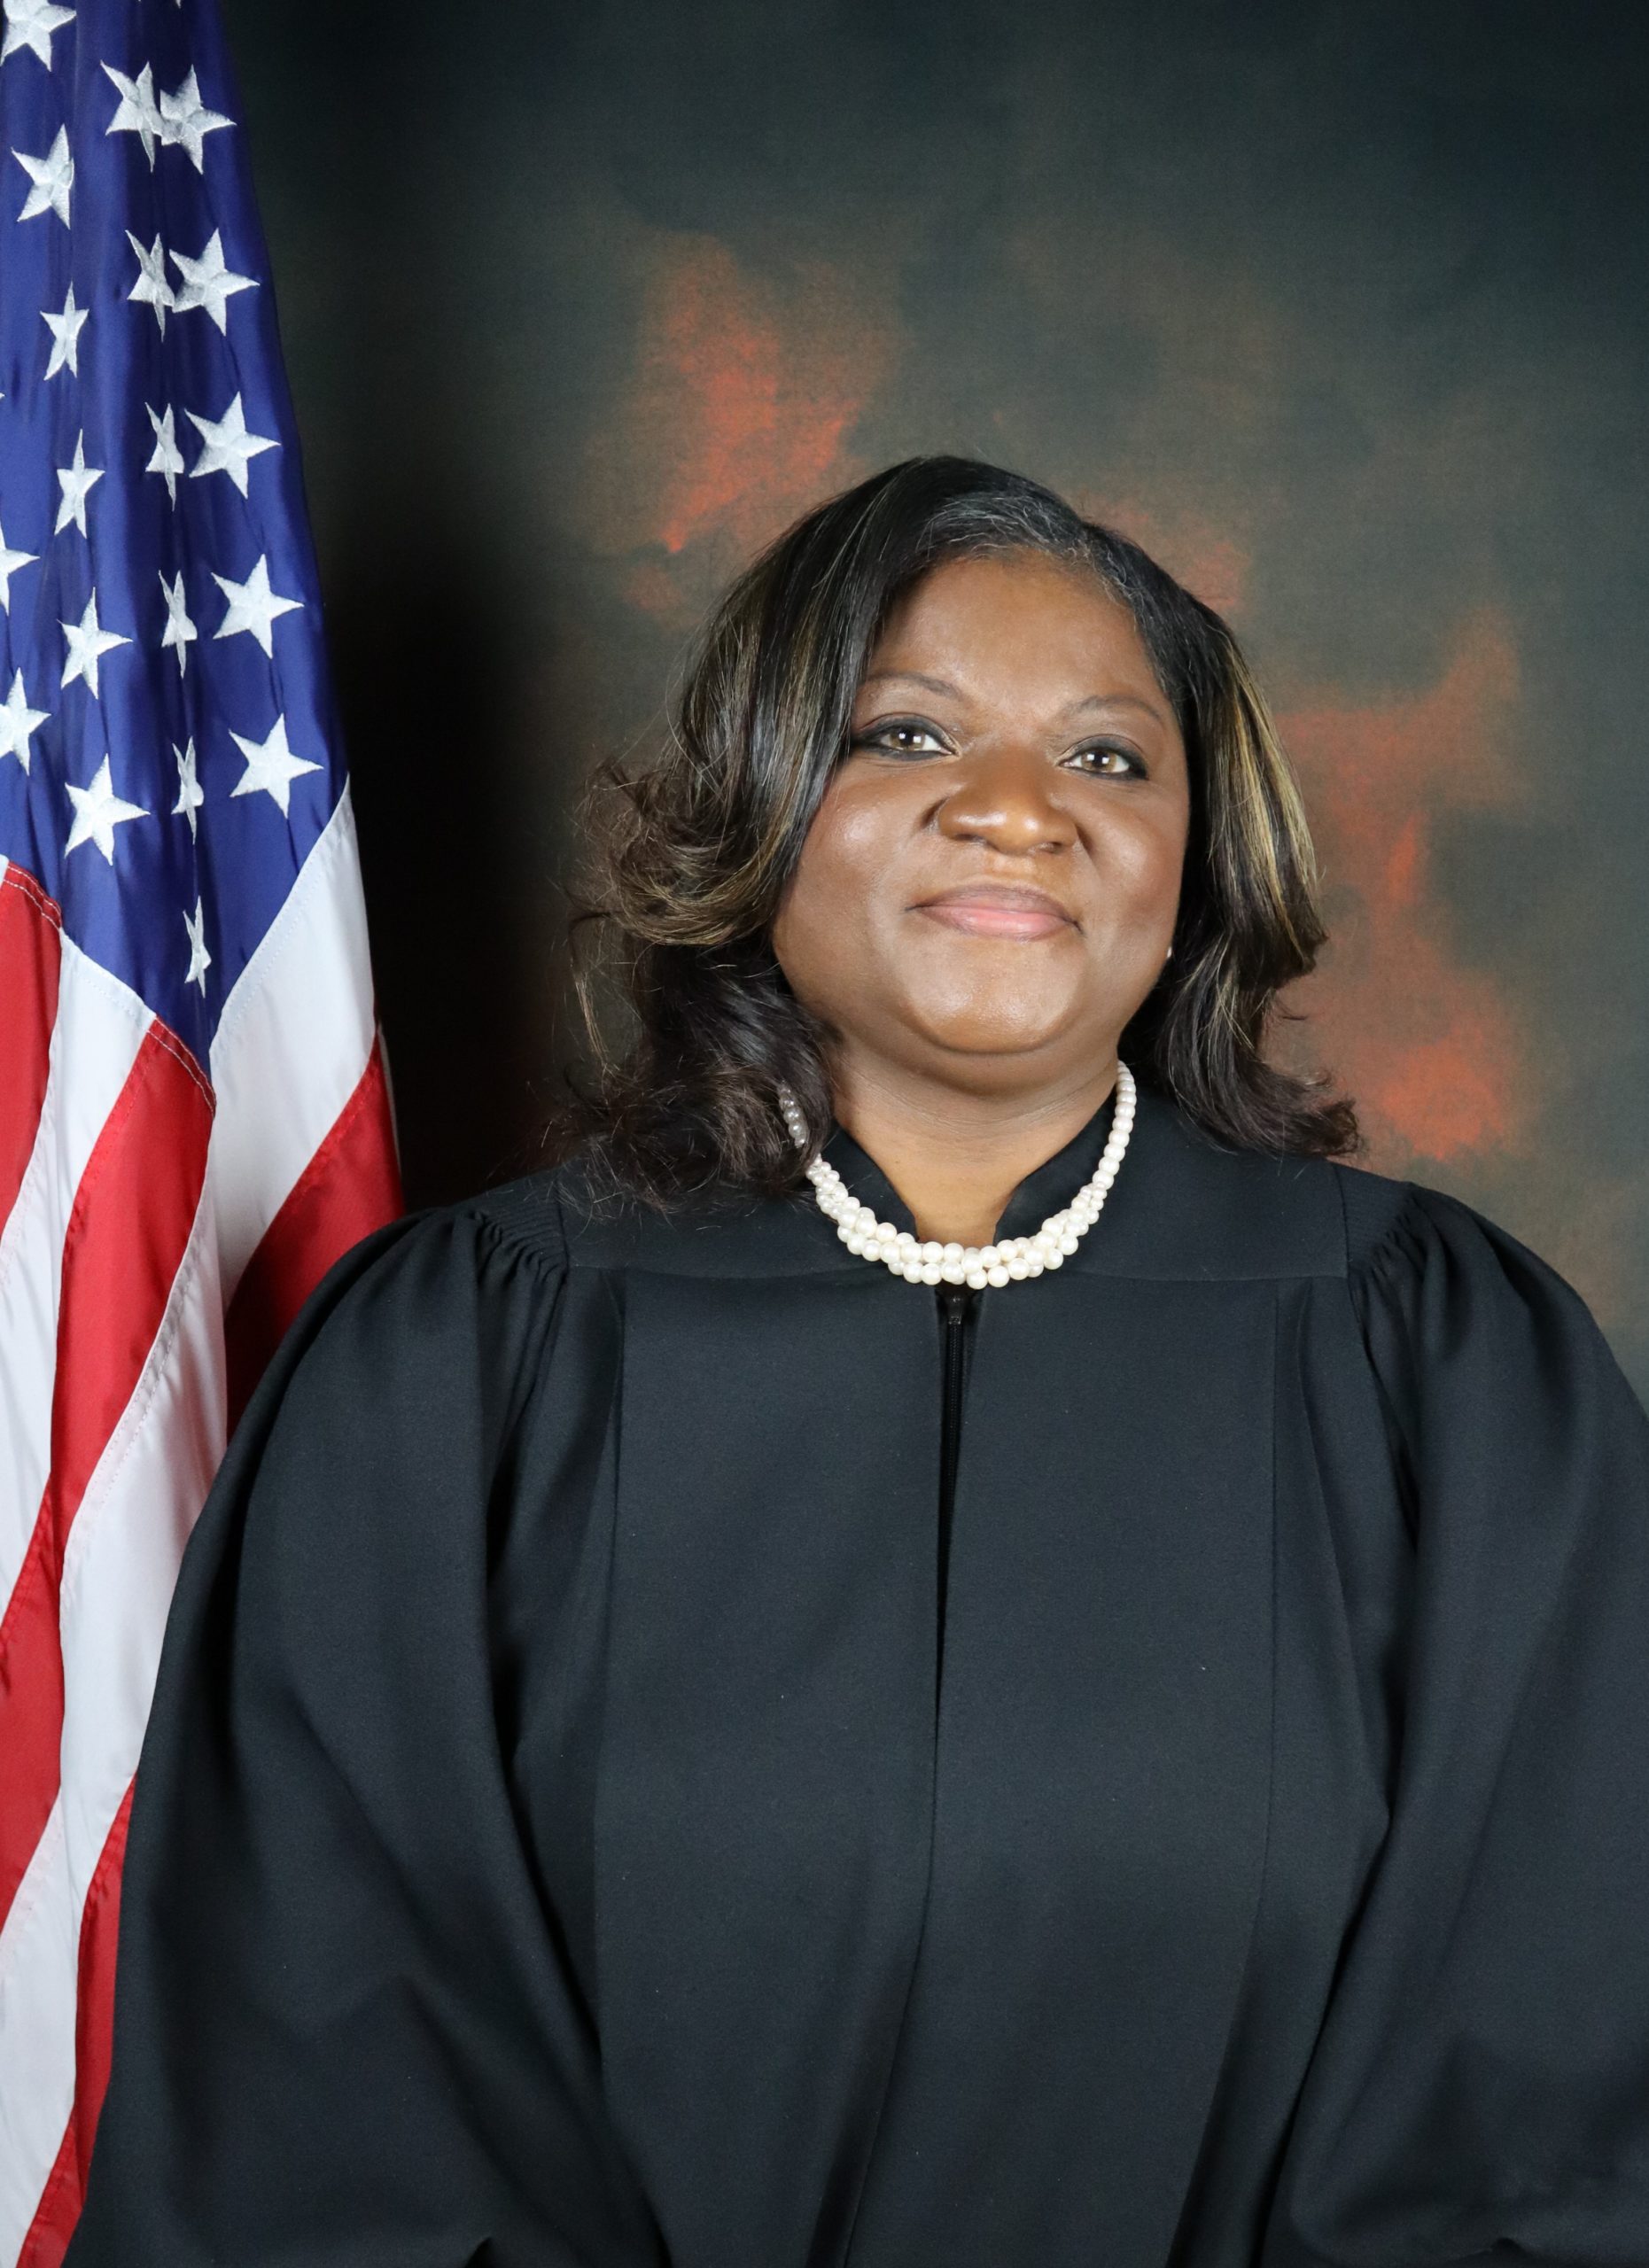 Judge Mackey-Barnes